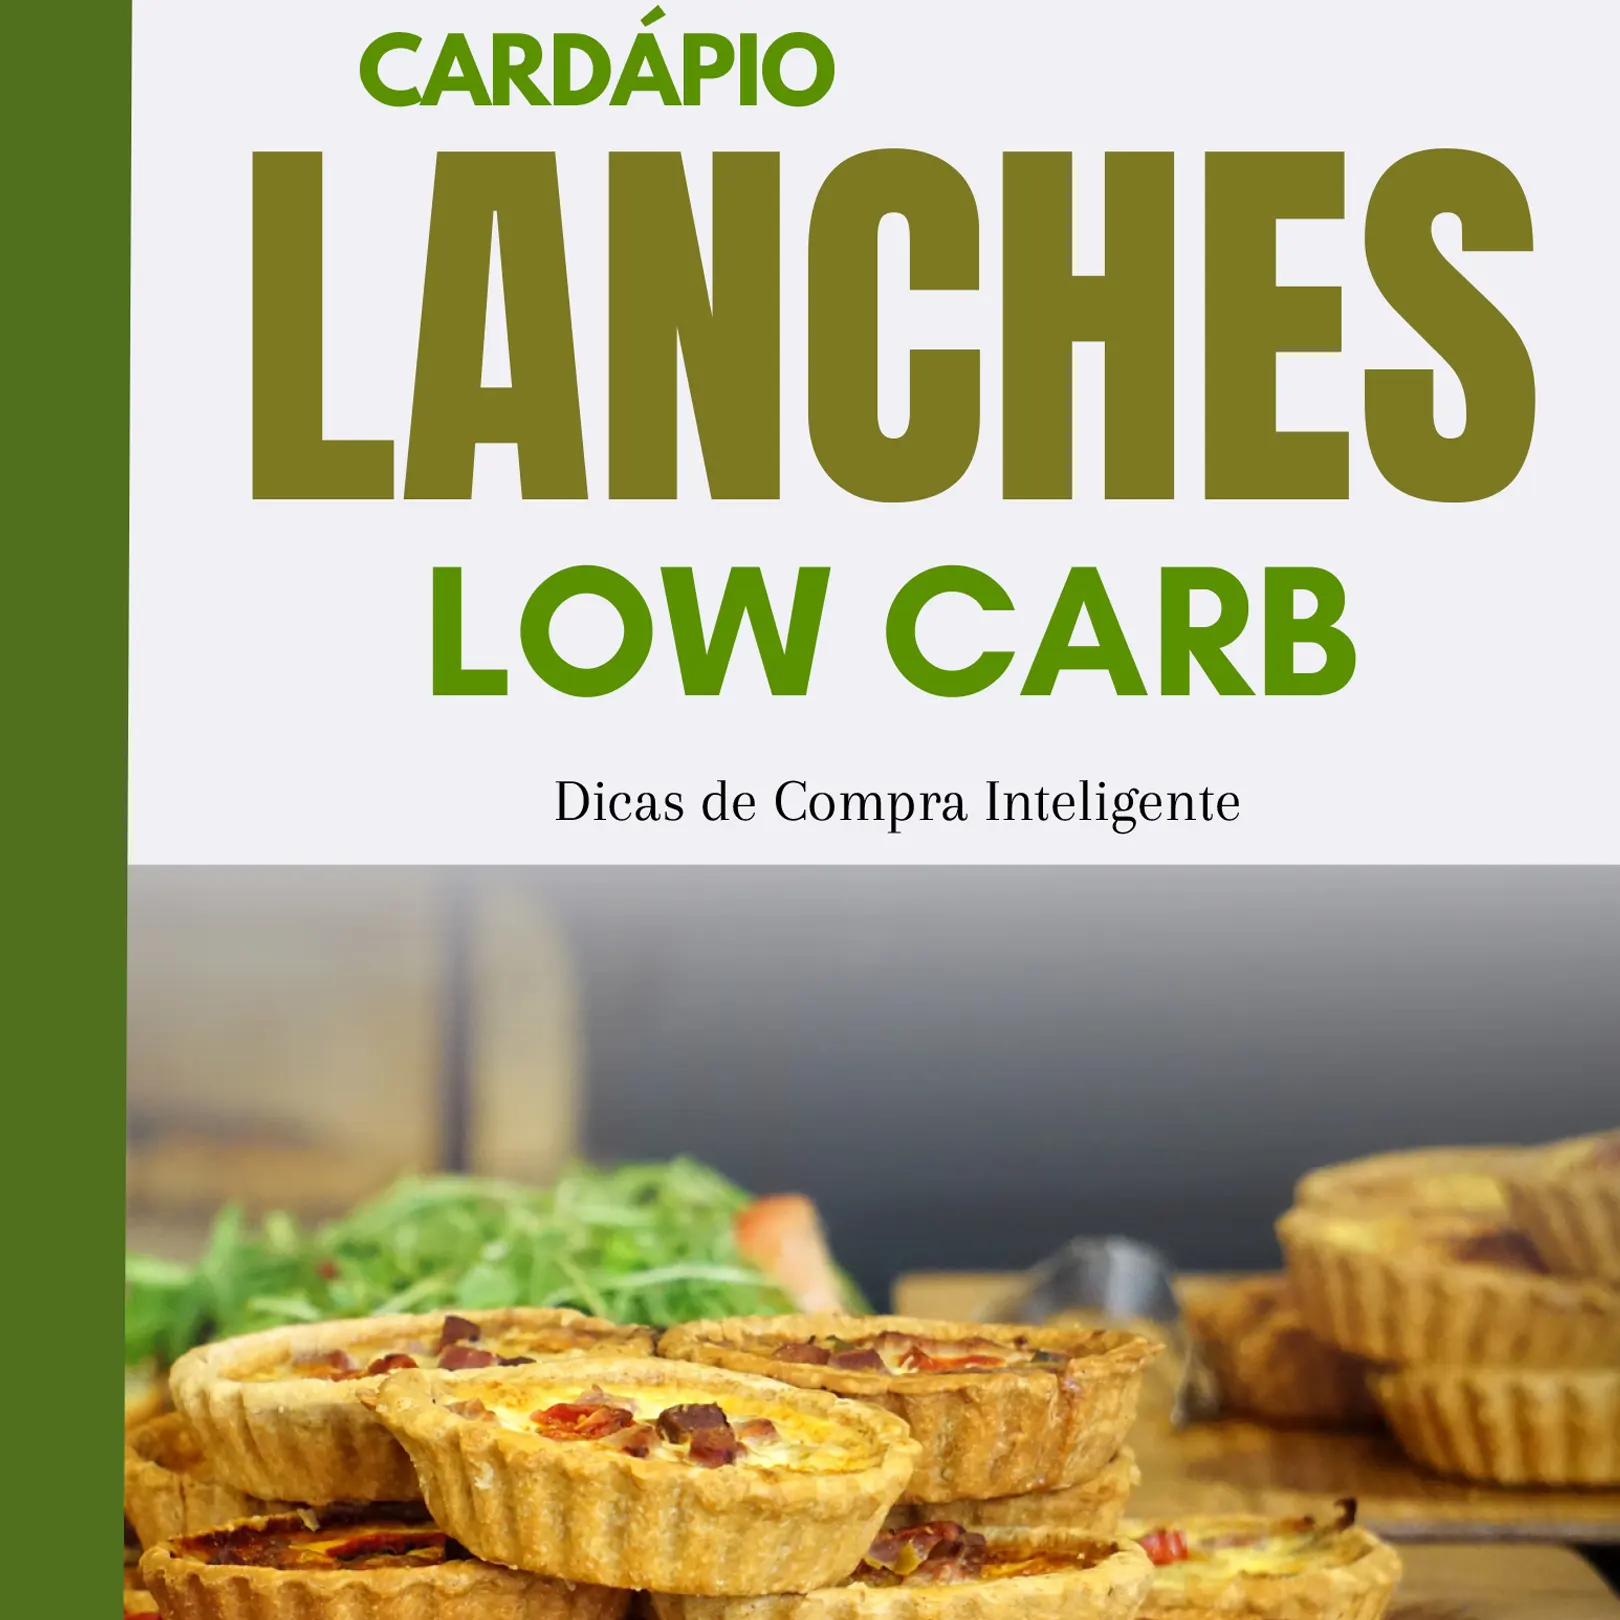 Cardápio Lanches Low Carb